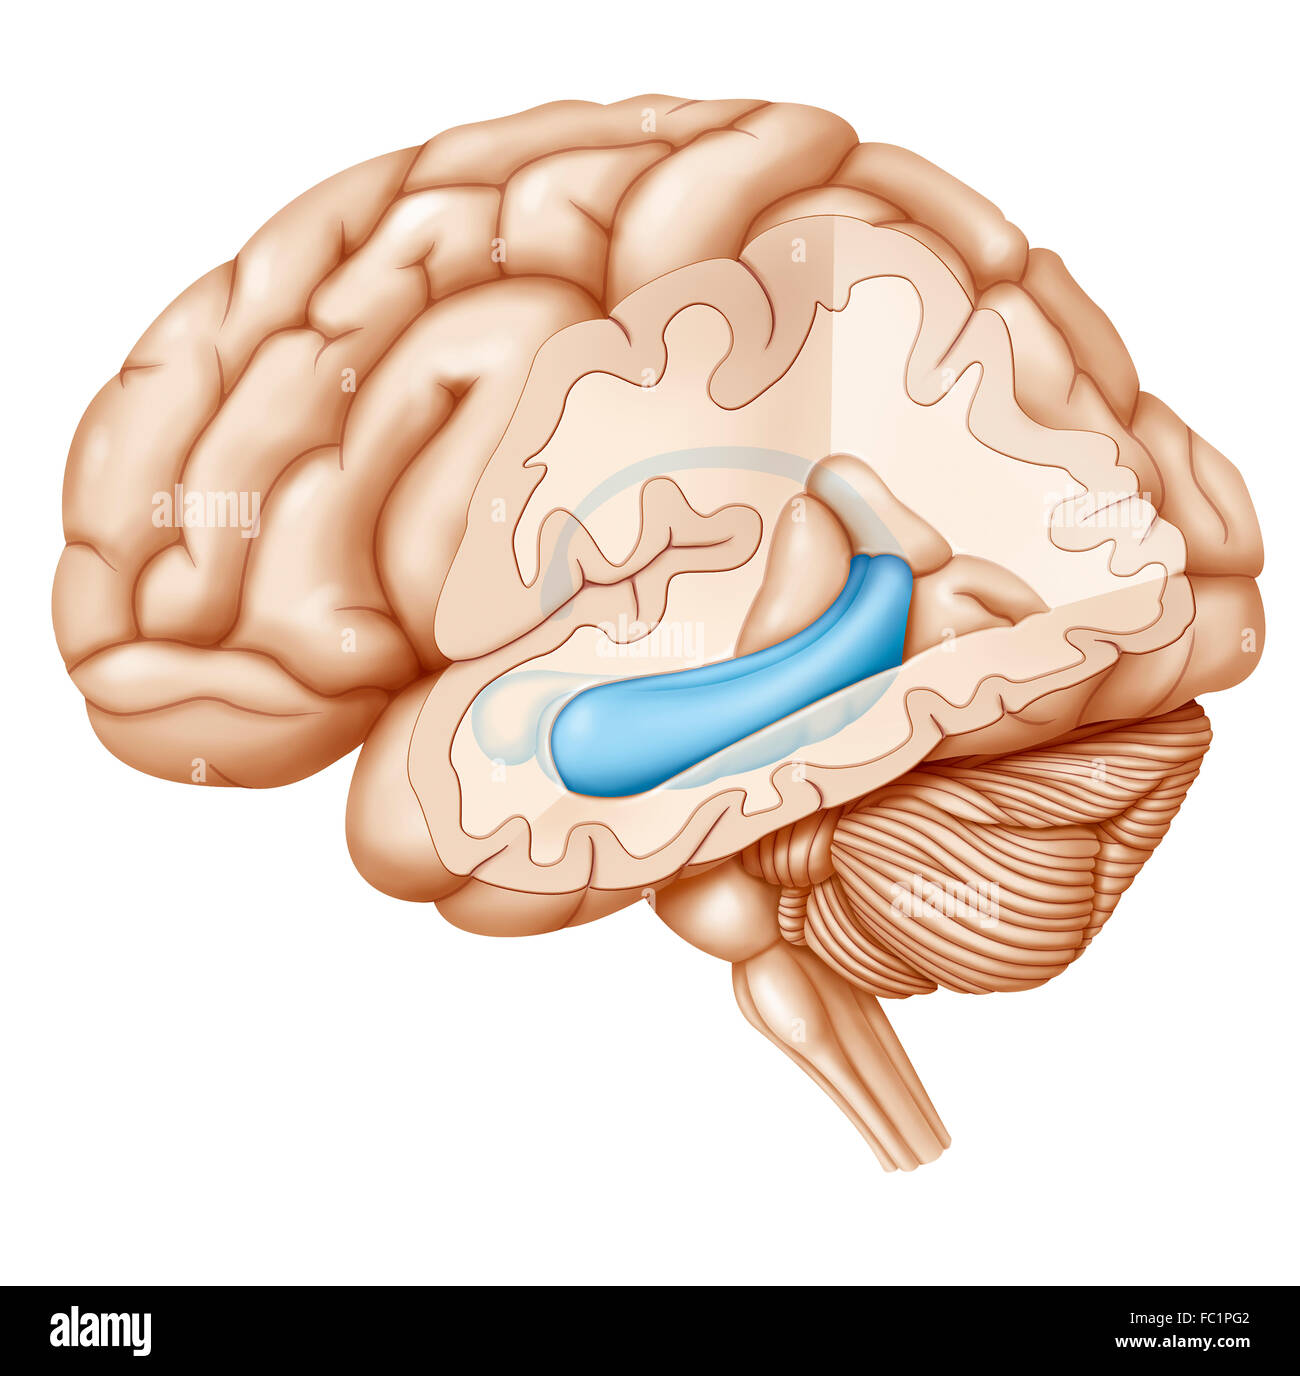 hippocampus brain